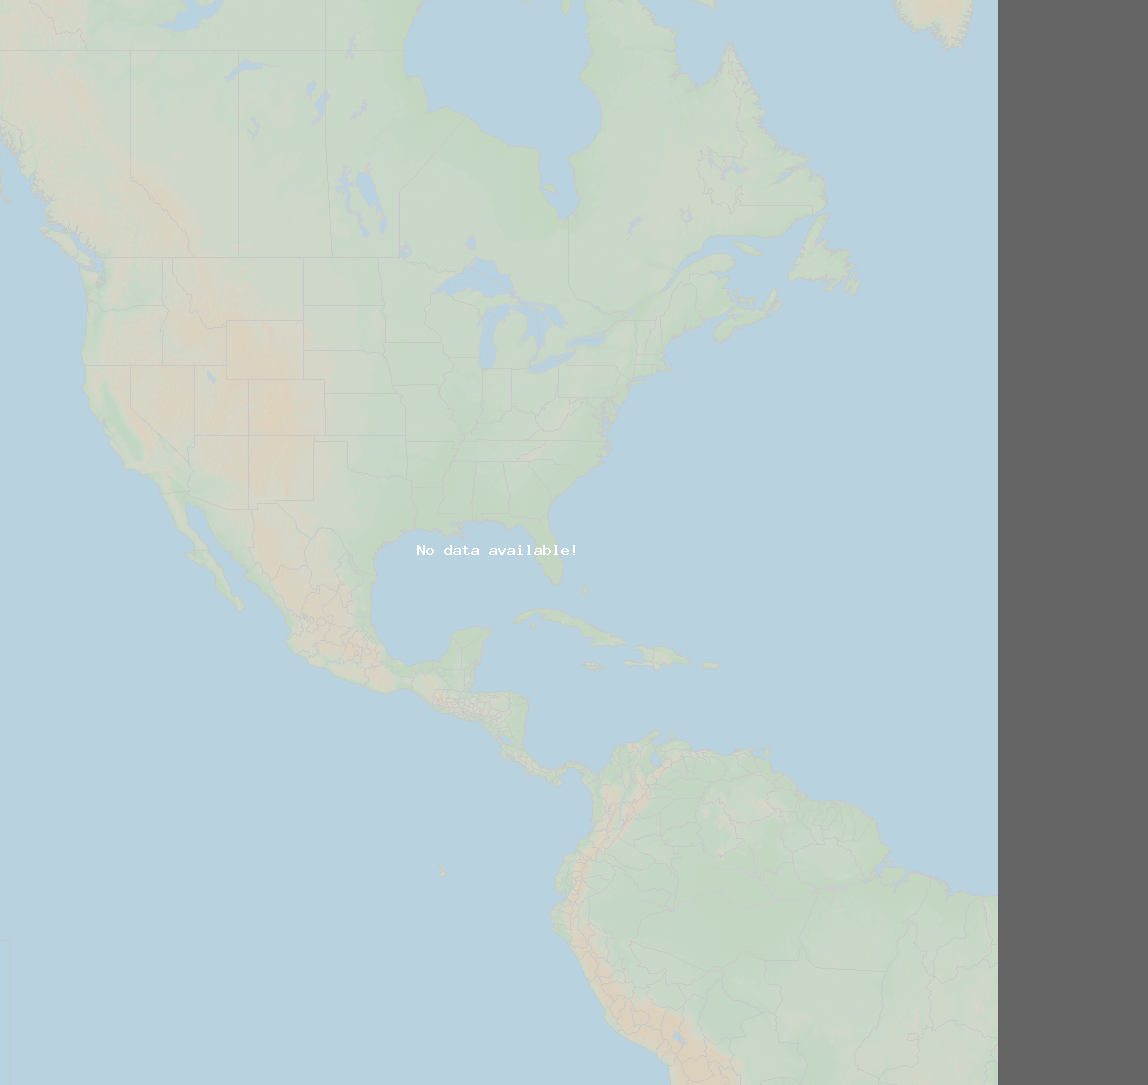 Andel blixtar (Station Haleakala) North America 2021 Oktober